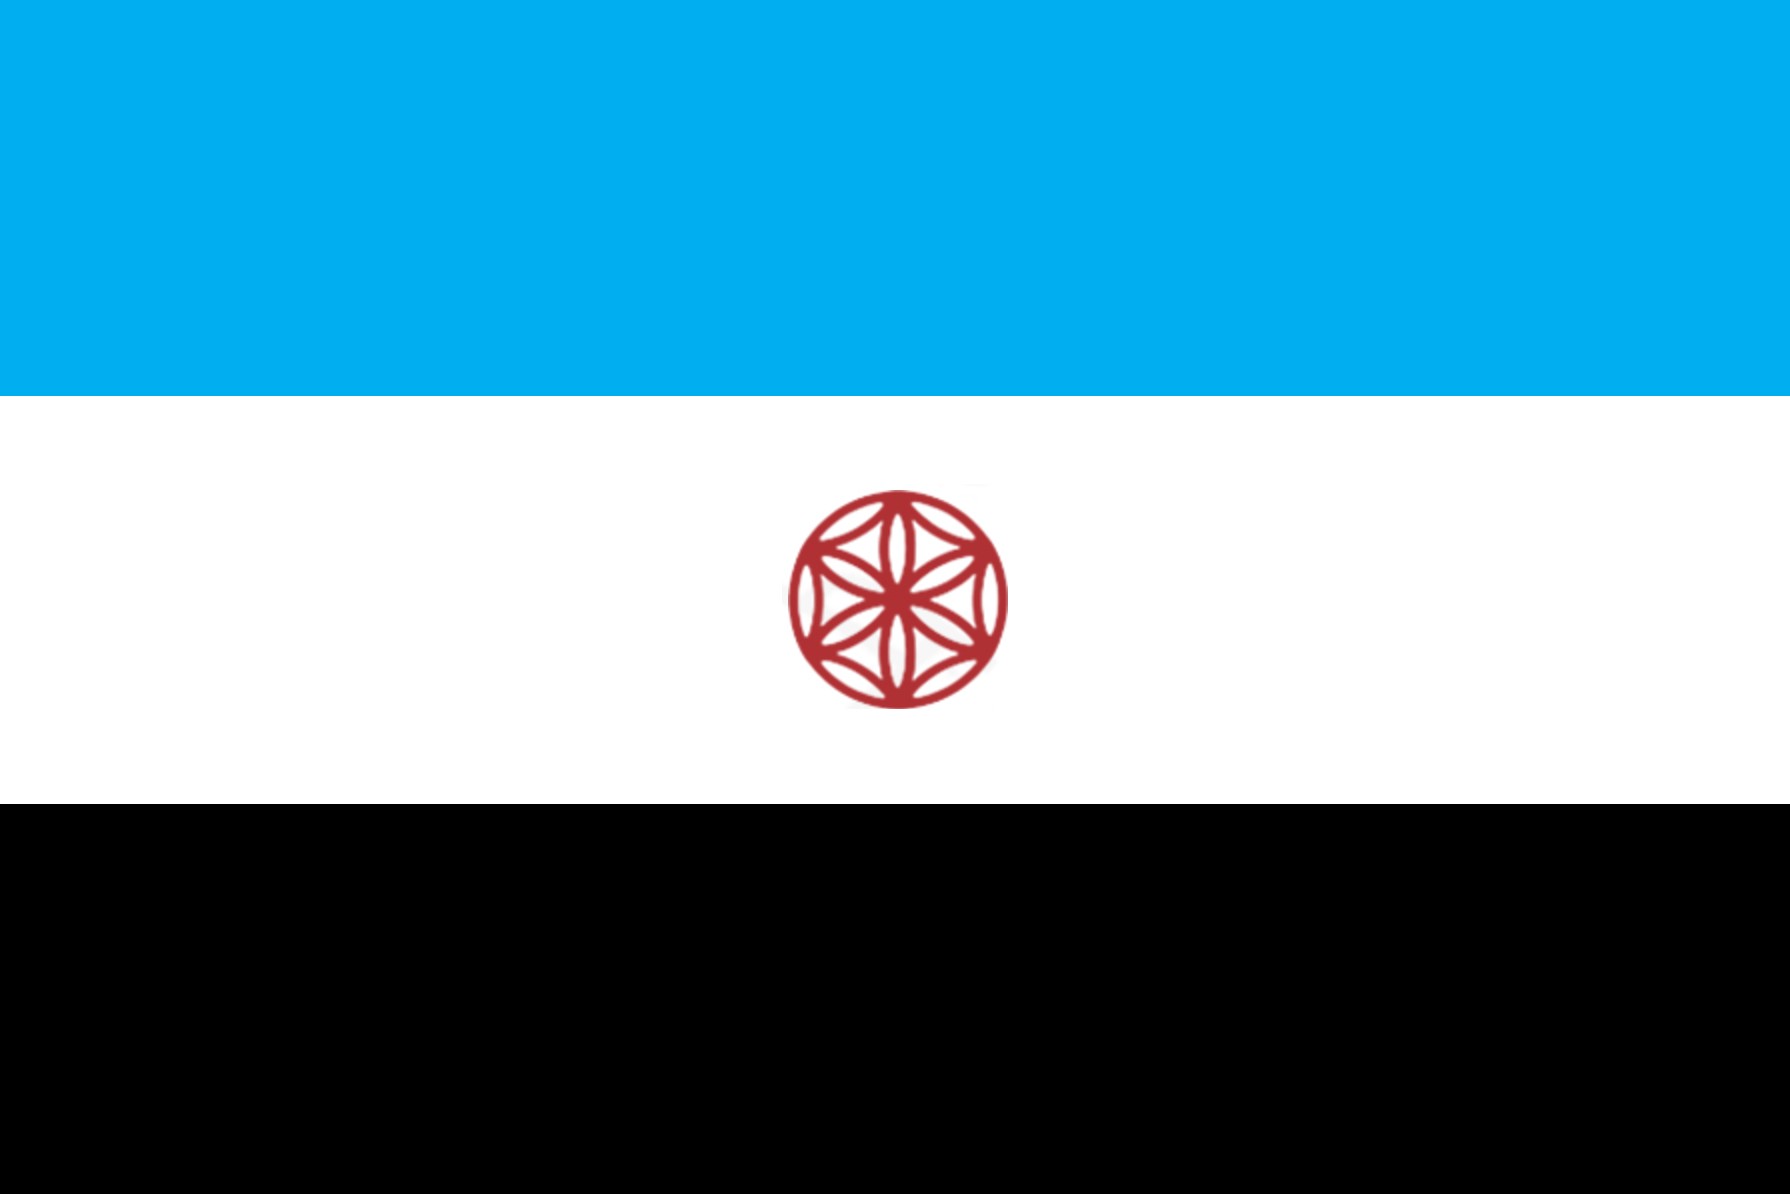 Asgardia flag